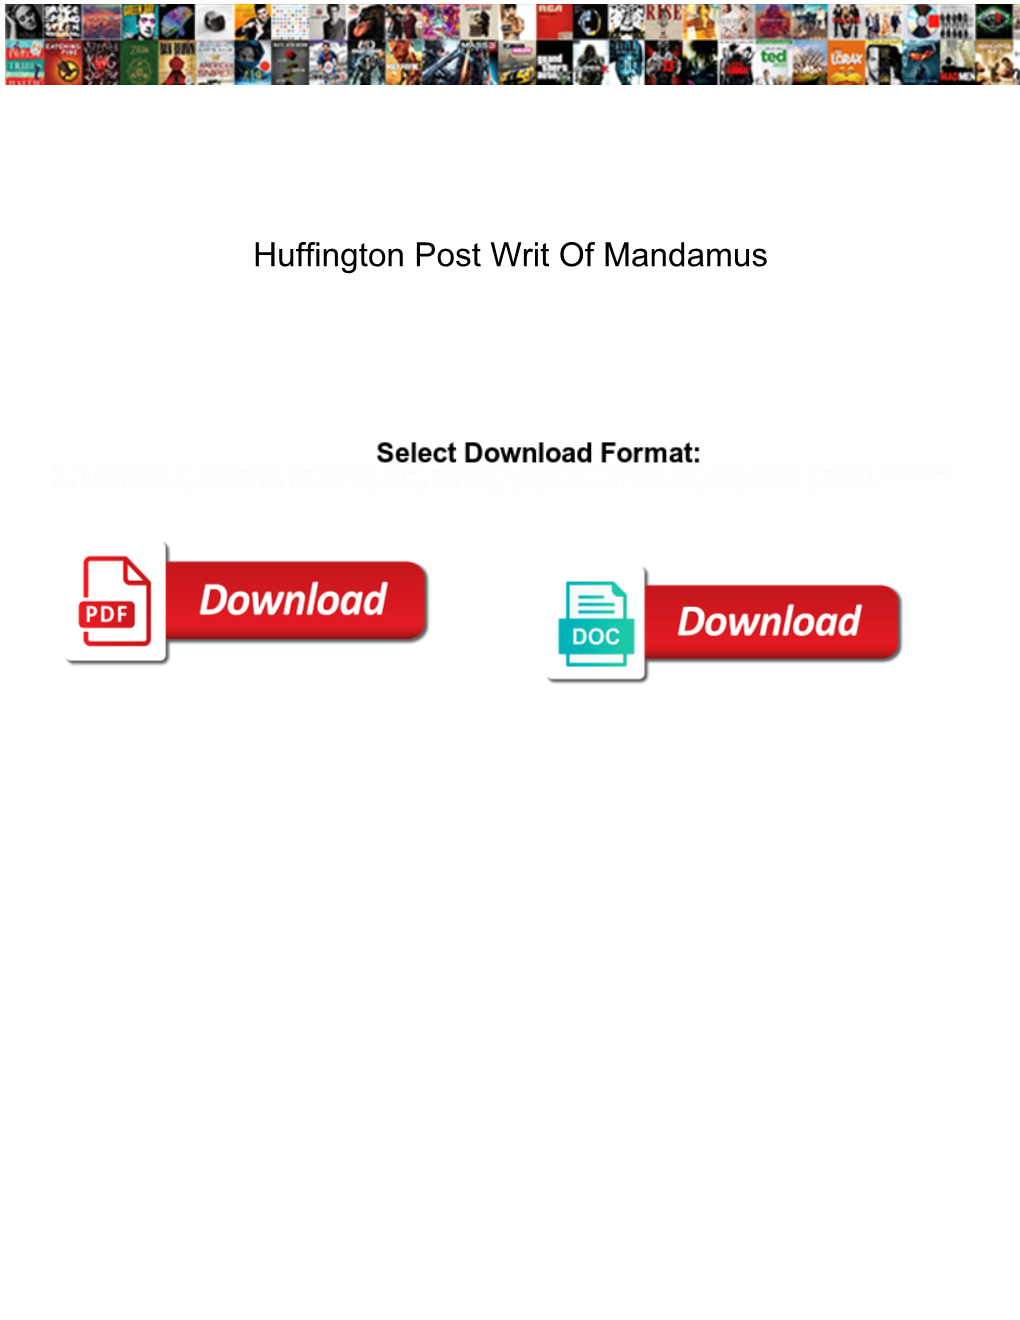 Huffington Post Writ of Mandamus